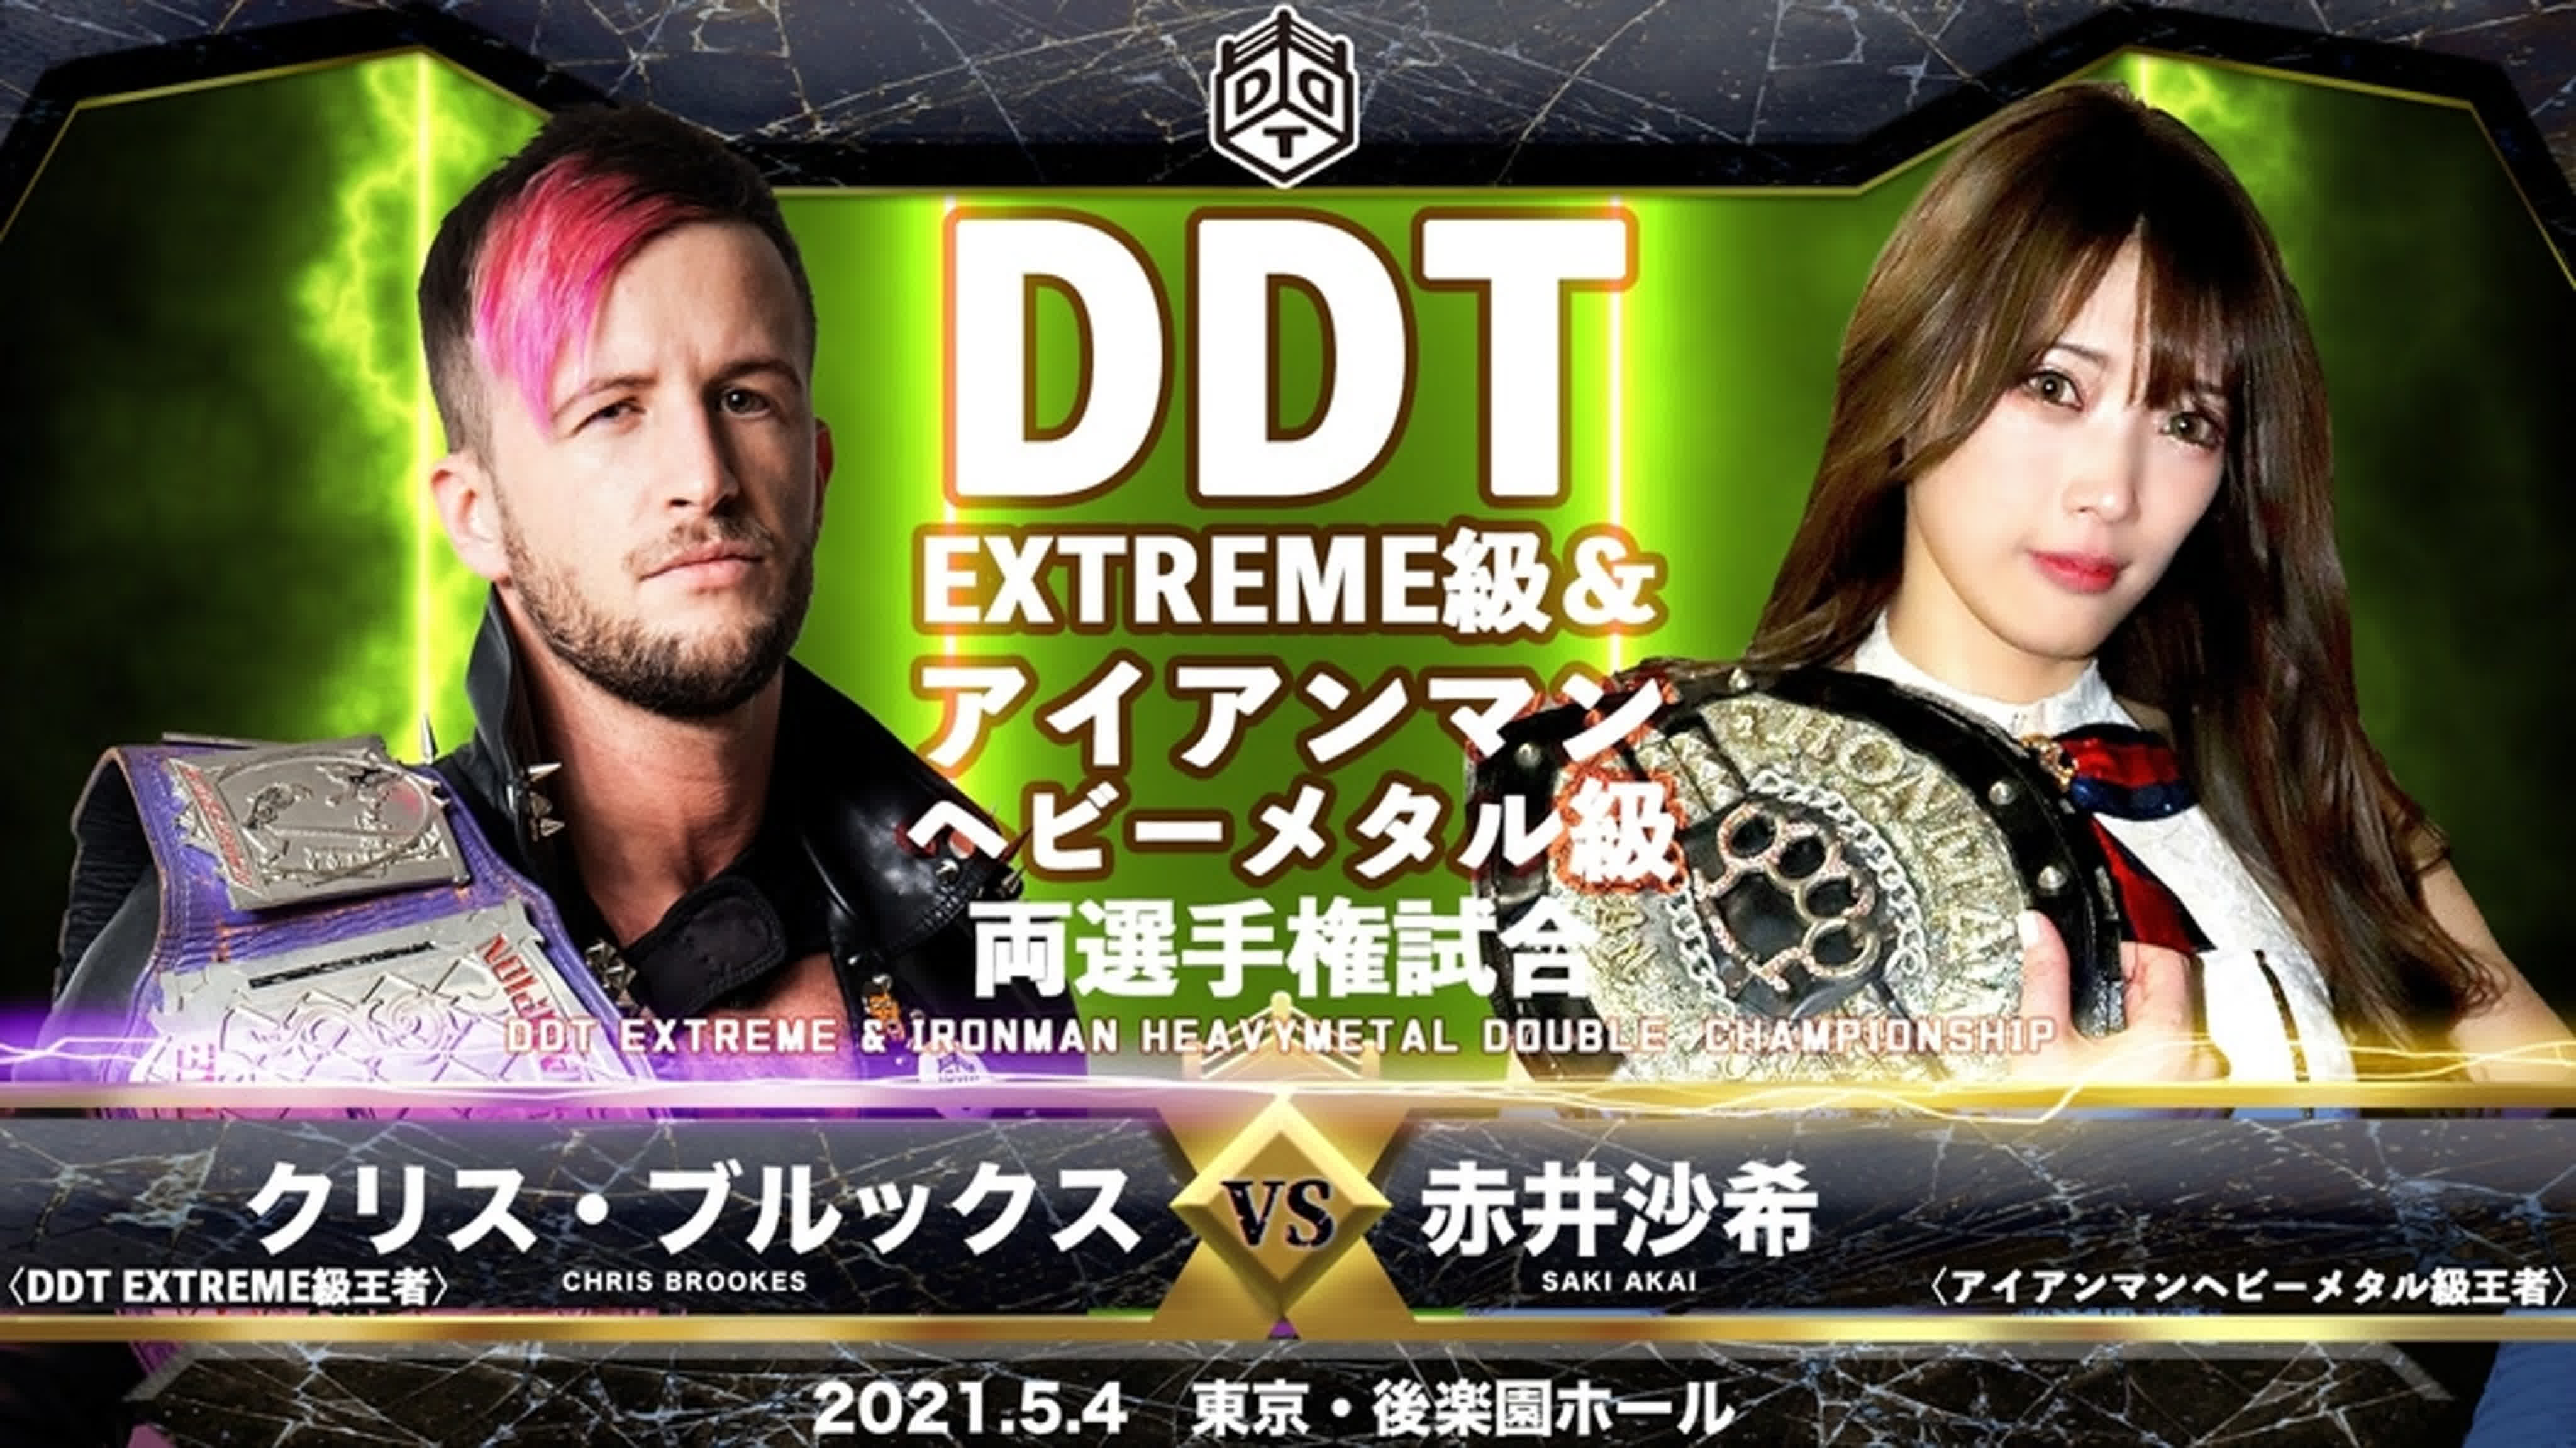 Матчи с DDT